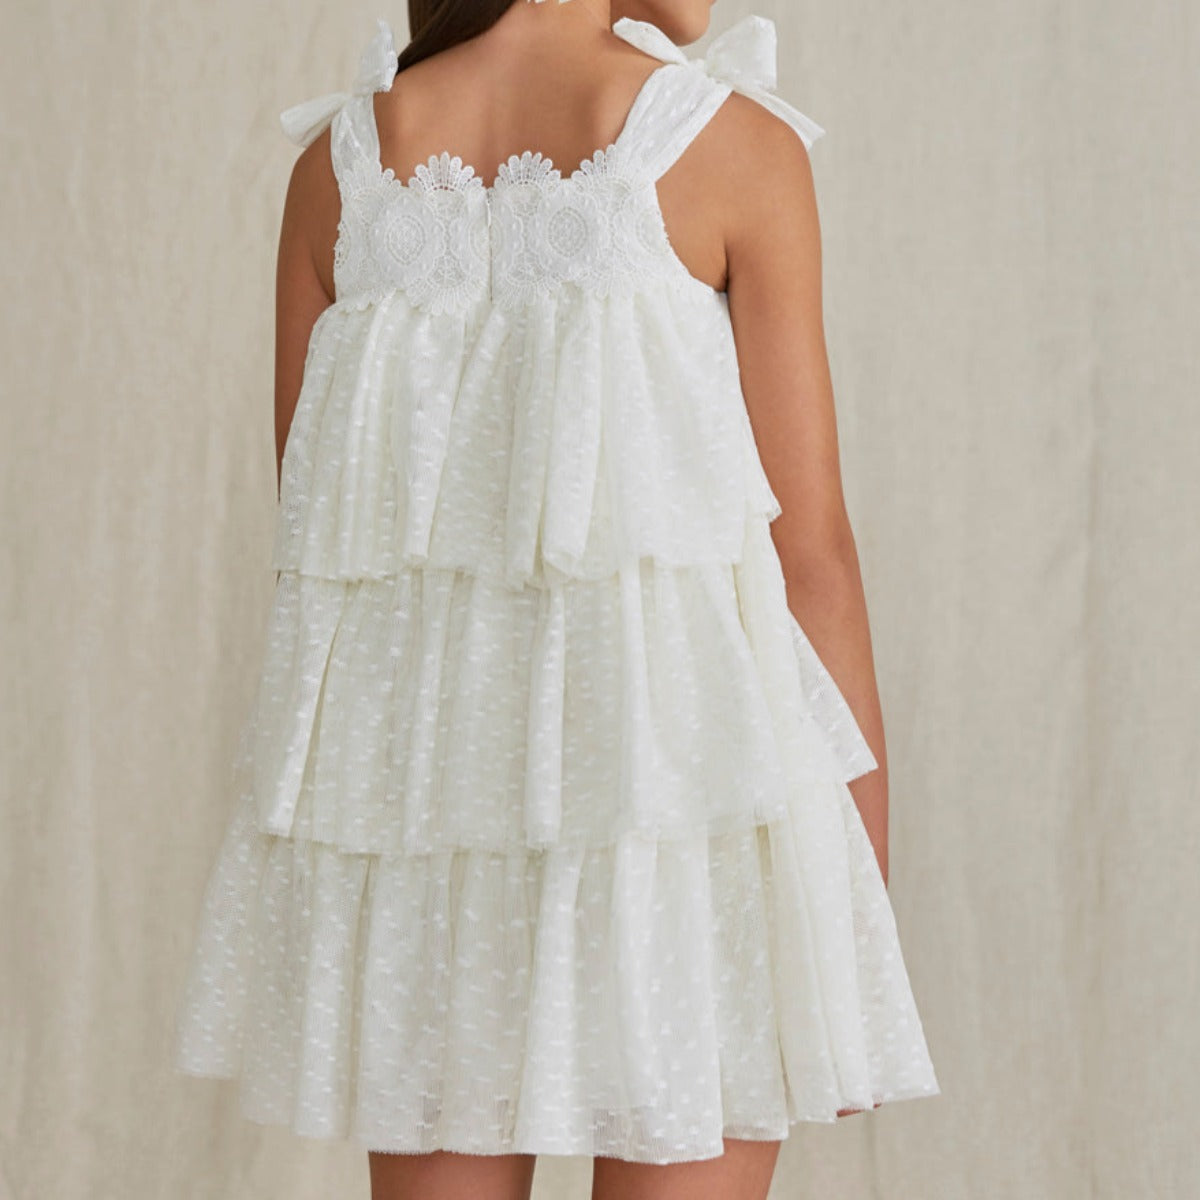 Cream Ruffled Tulle Dress